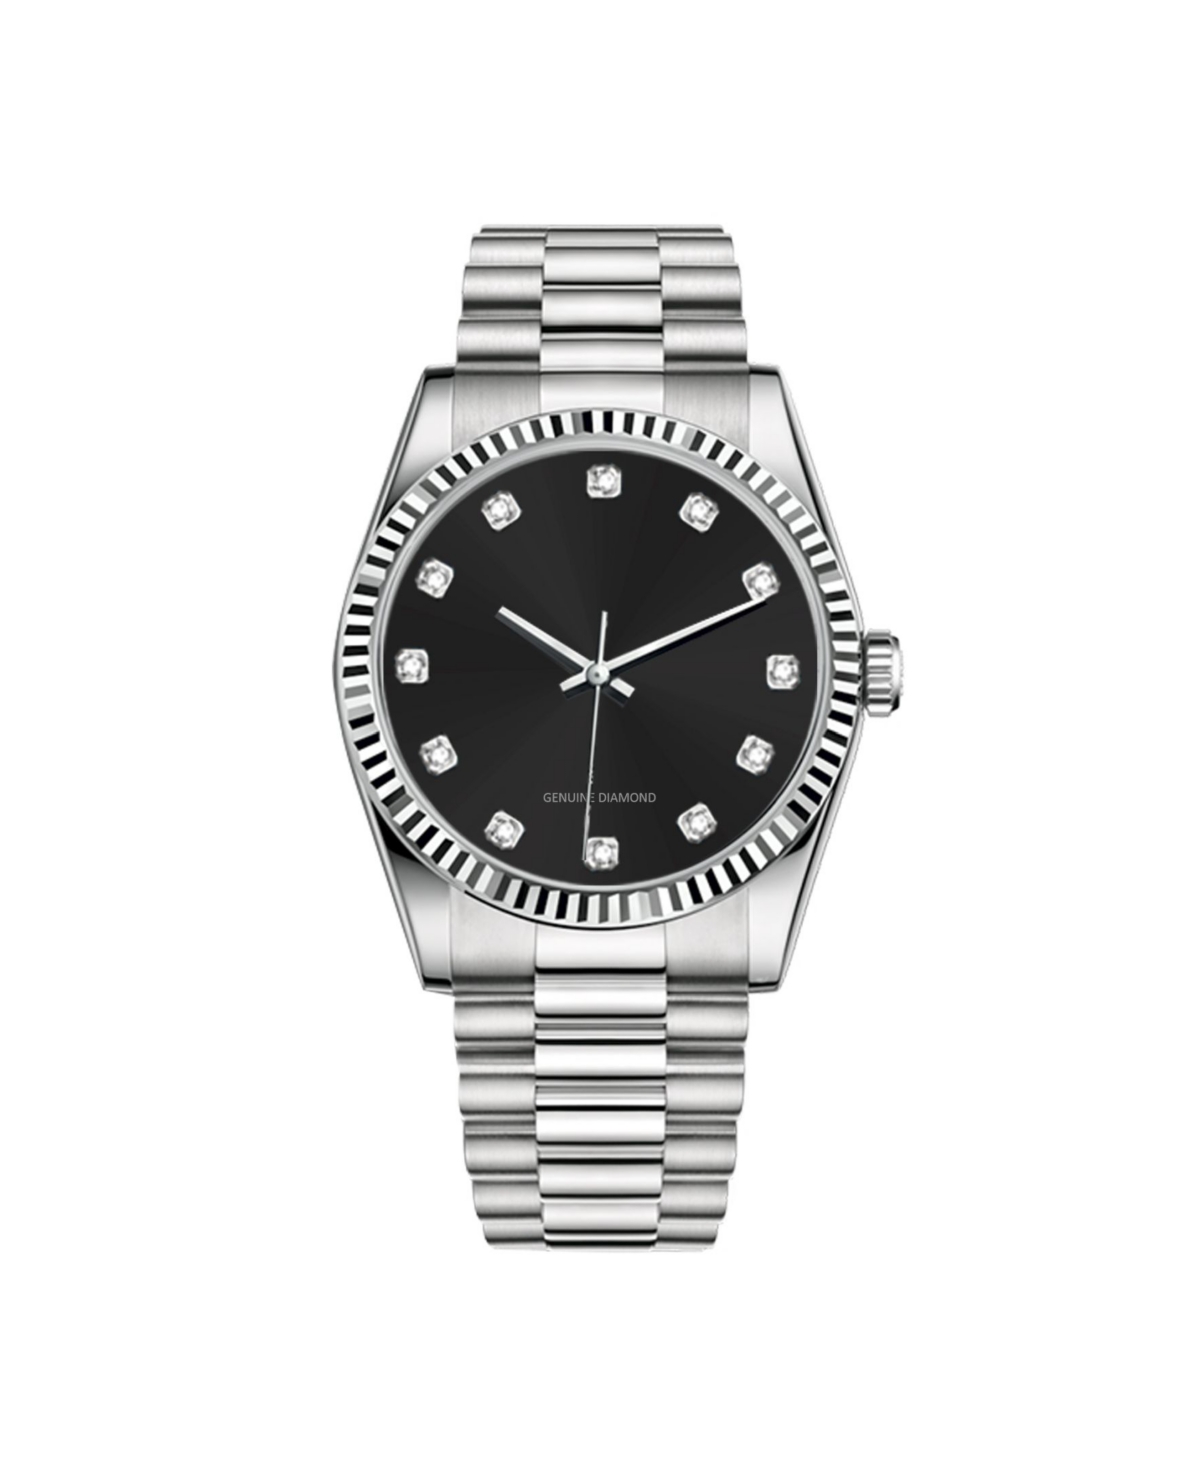 Men's Shiny Black Analog Quartz Watch and Stackable Gift Set - Black